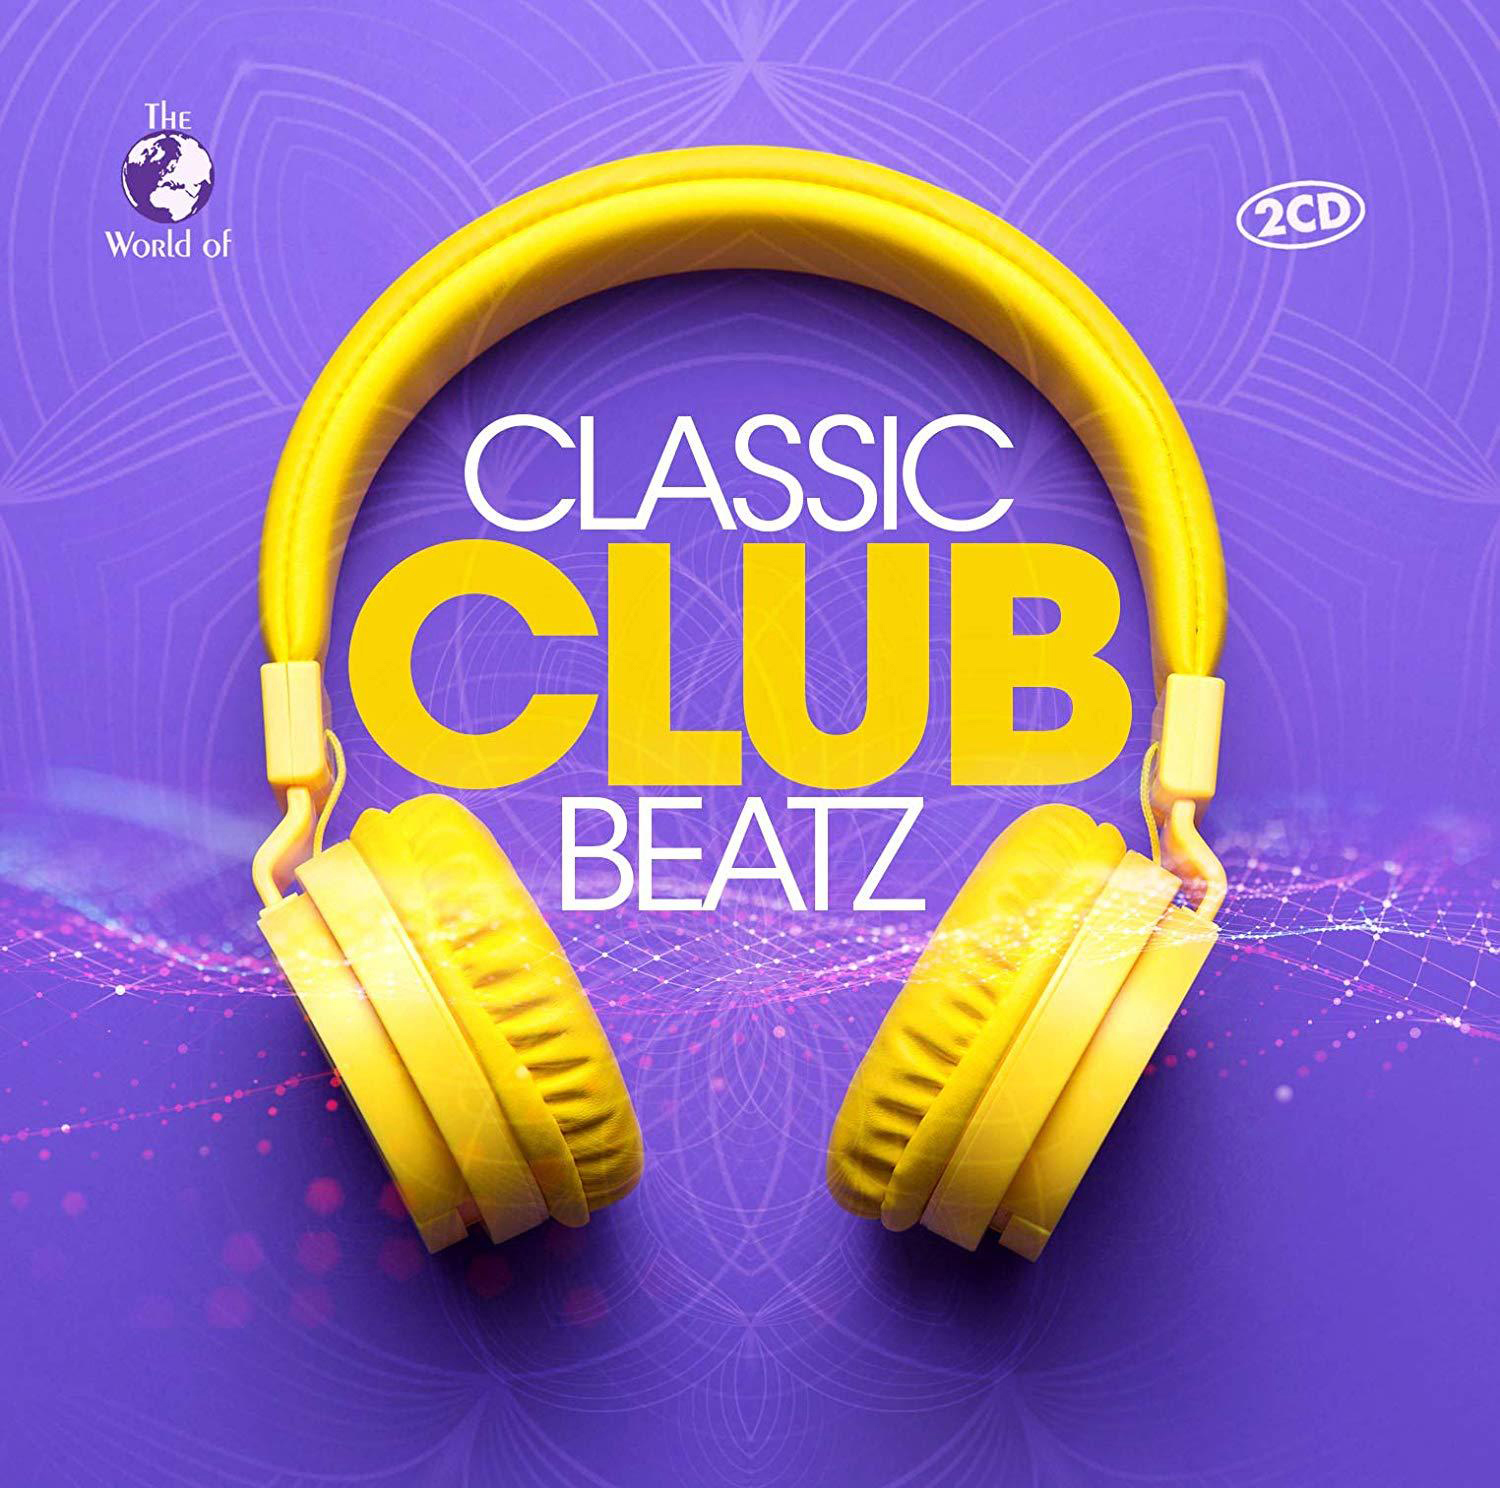 VARIOUS - Classic Club Beatz (CD) 